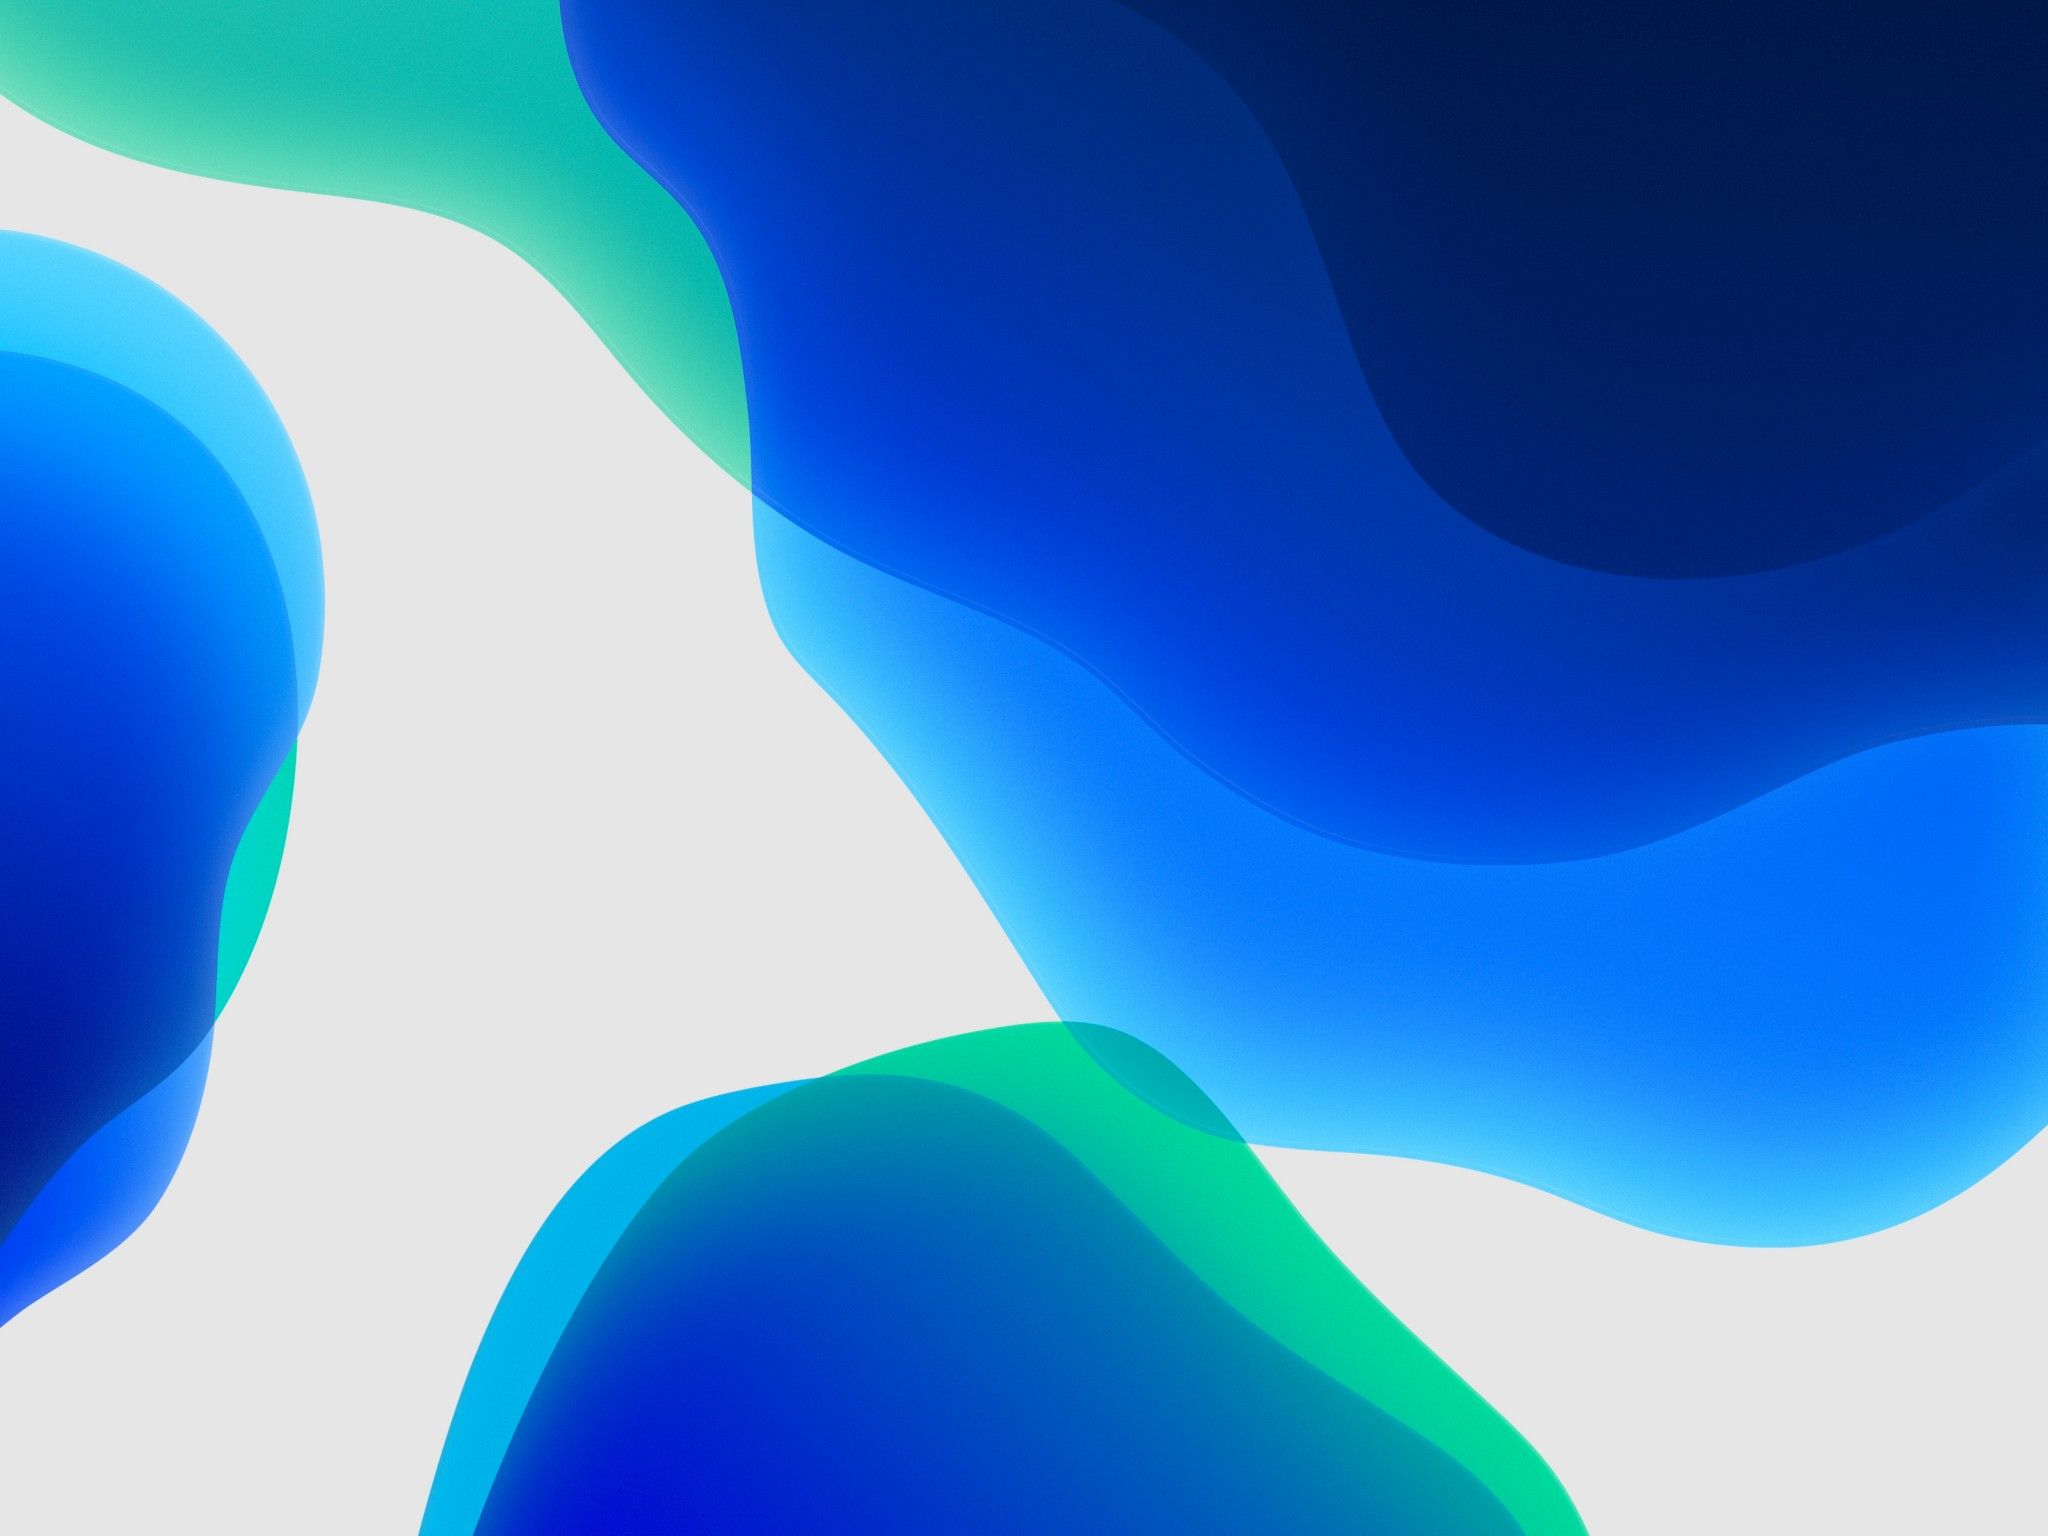 iPadOS 4K Wallpaper, Stock, Blue, White background, iPad, iOS HD, Abstract